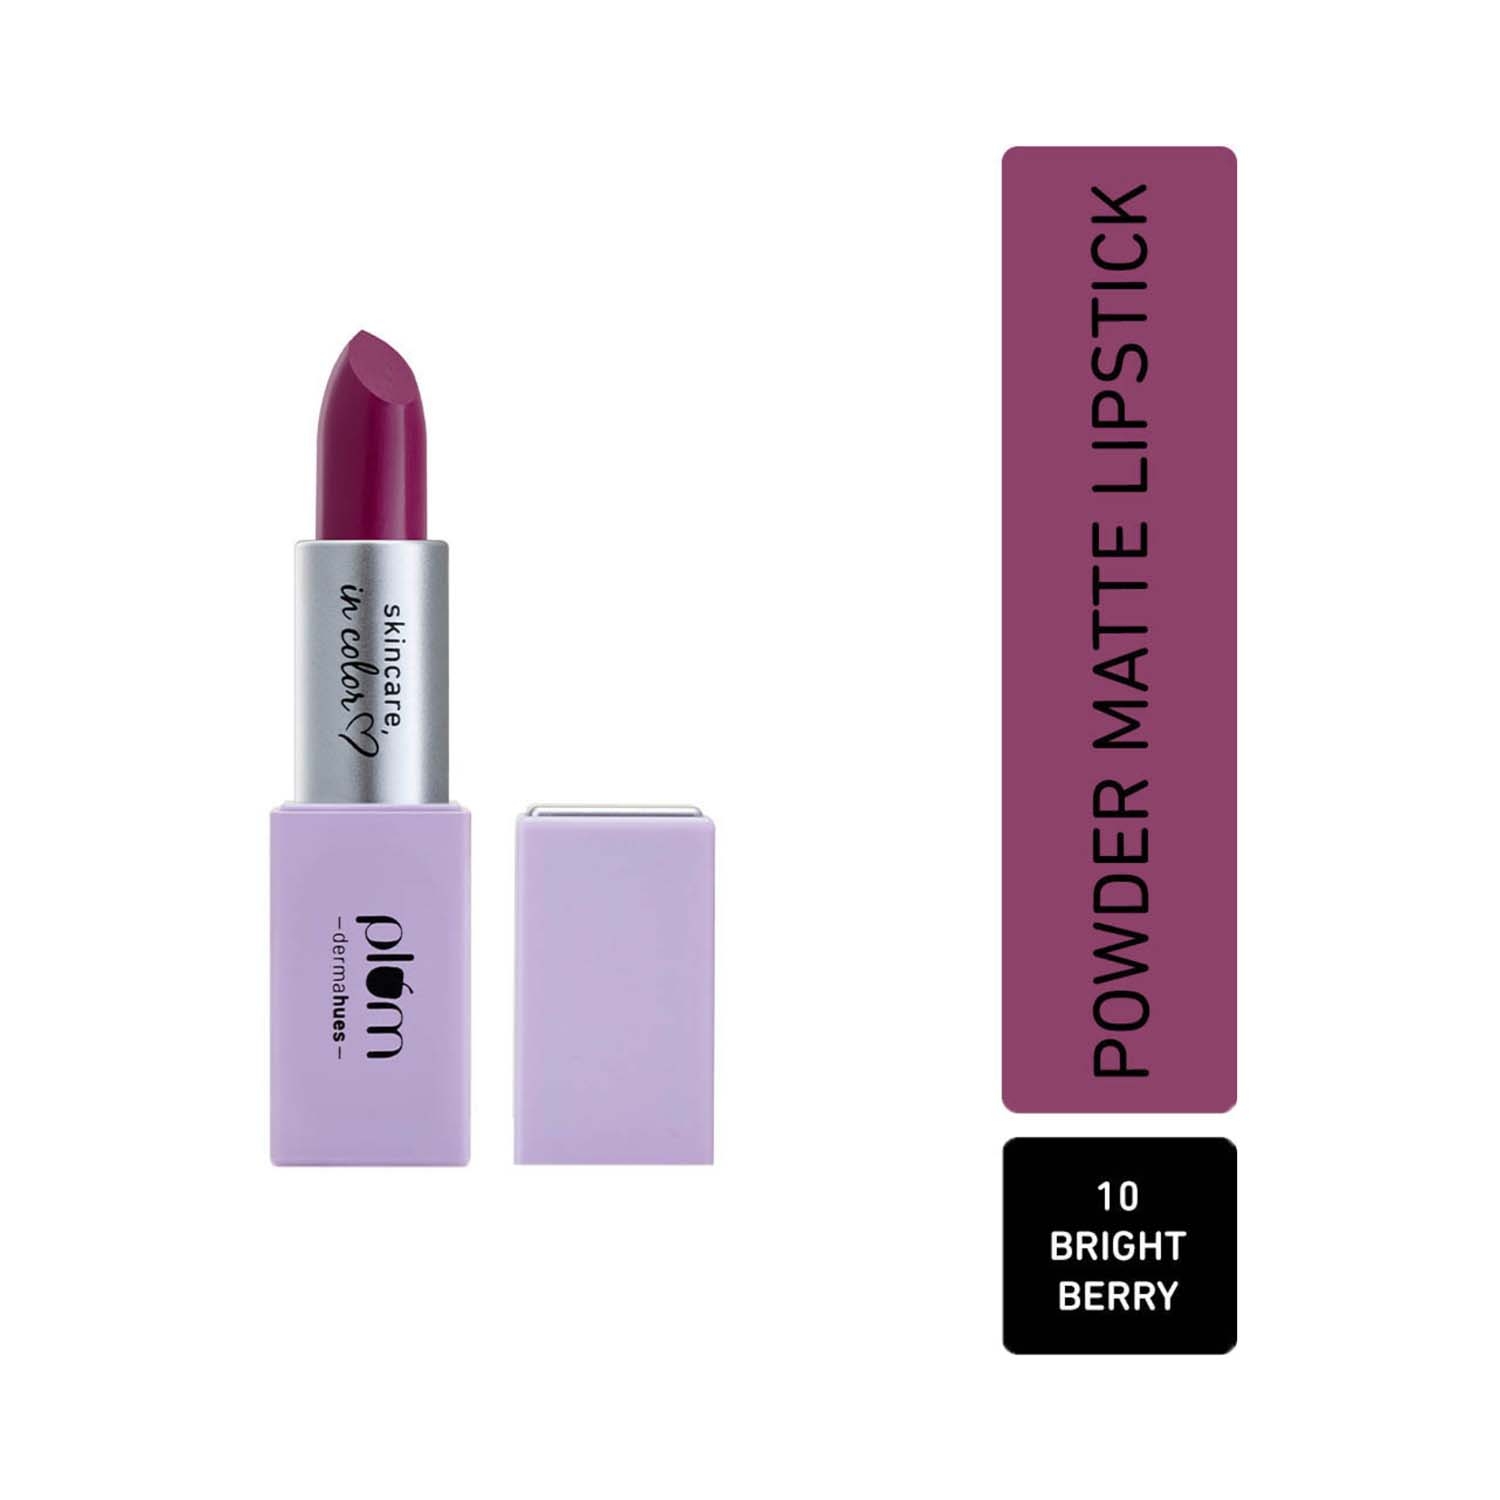 Plum Velvet Haze Powder Matte Lipstick - 10 Bright Berry (4.2g)